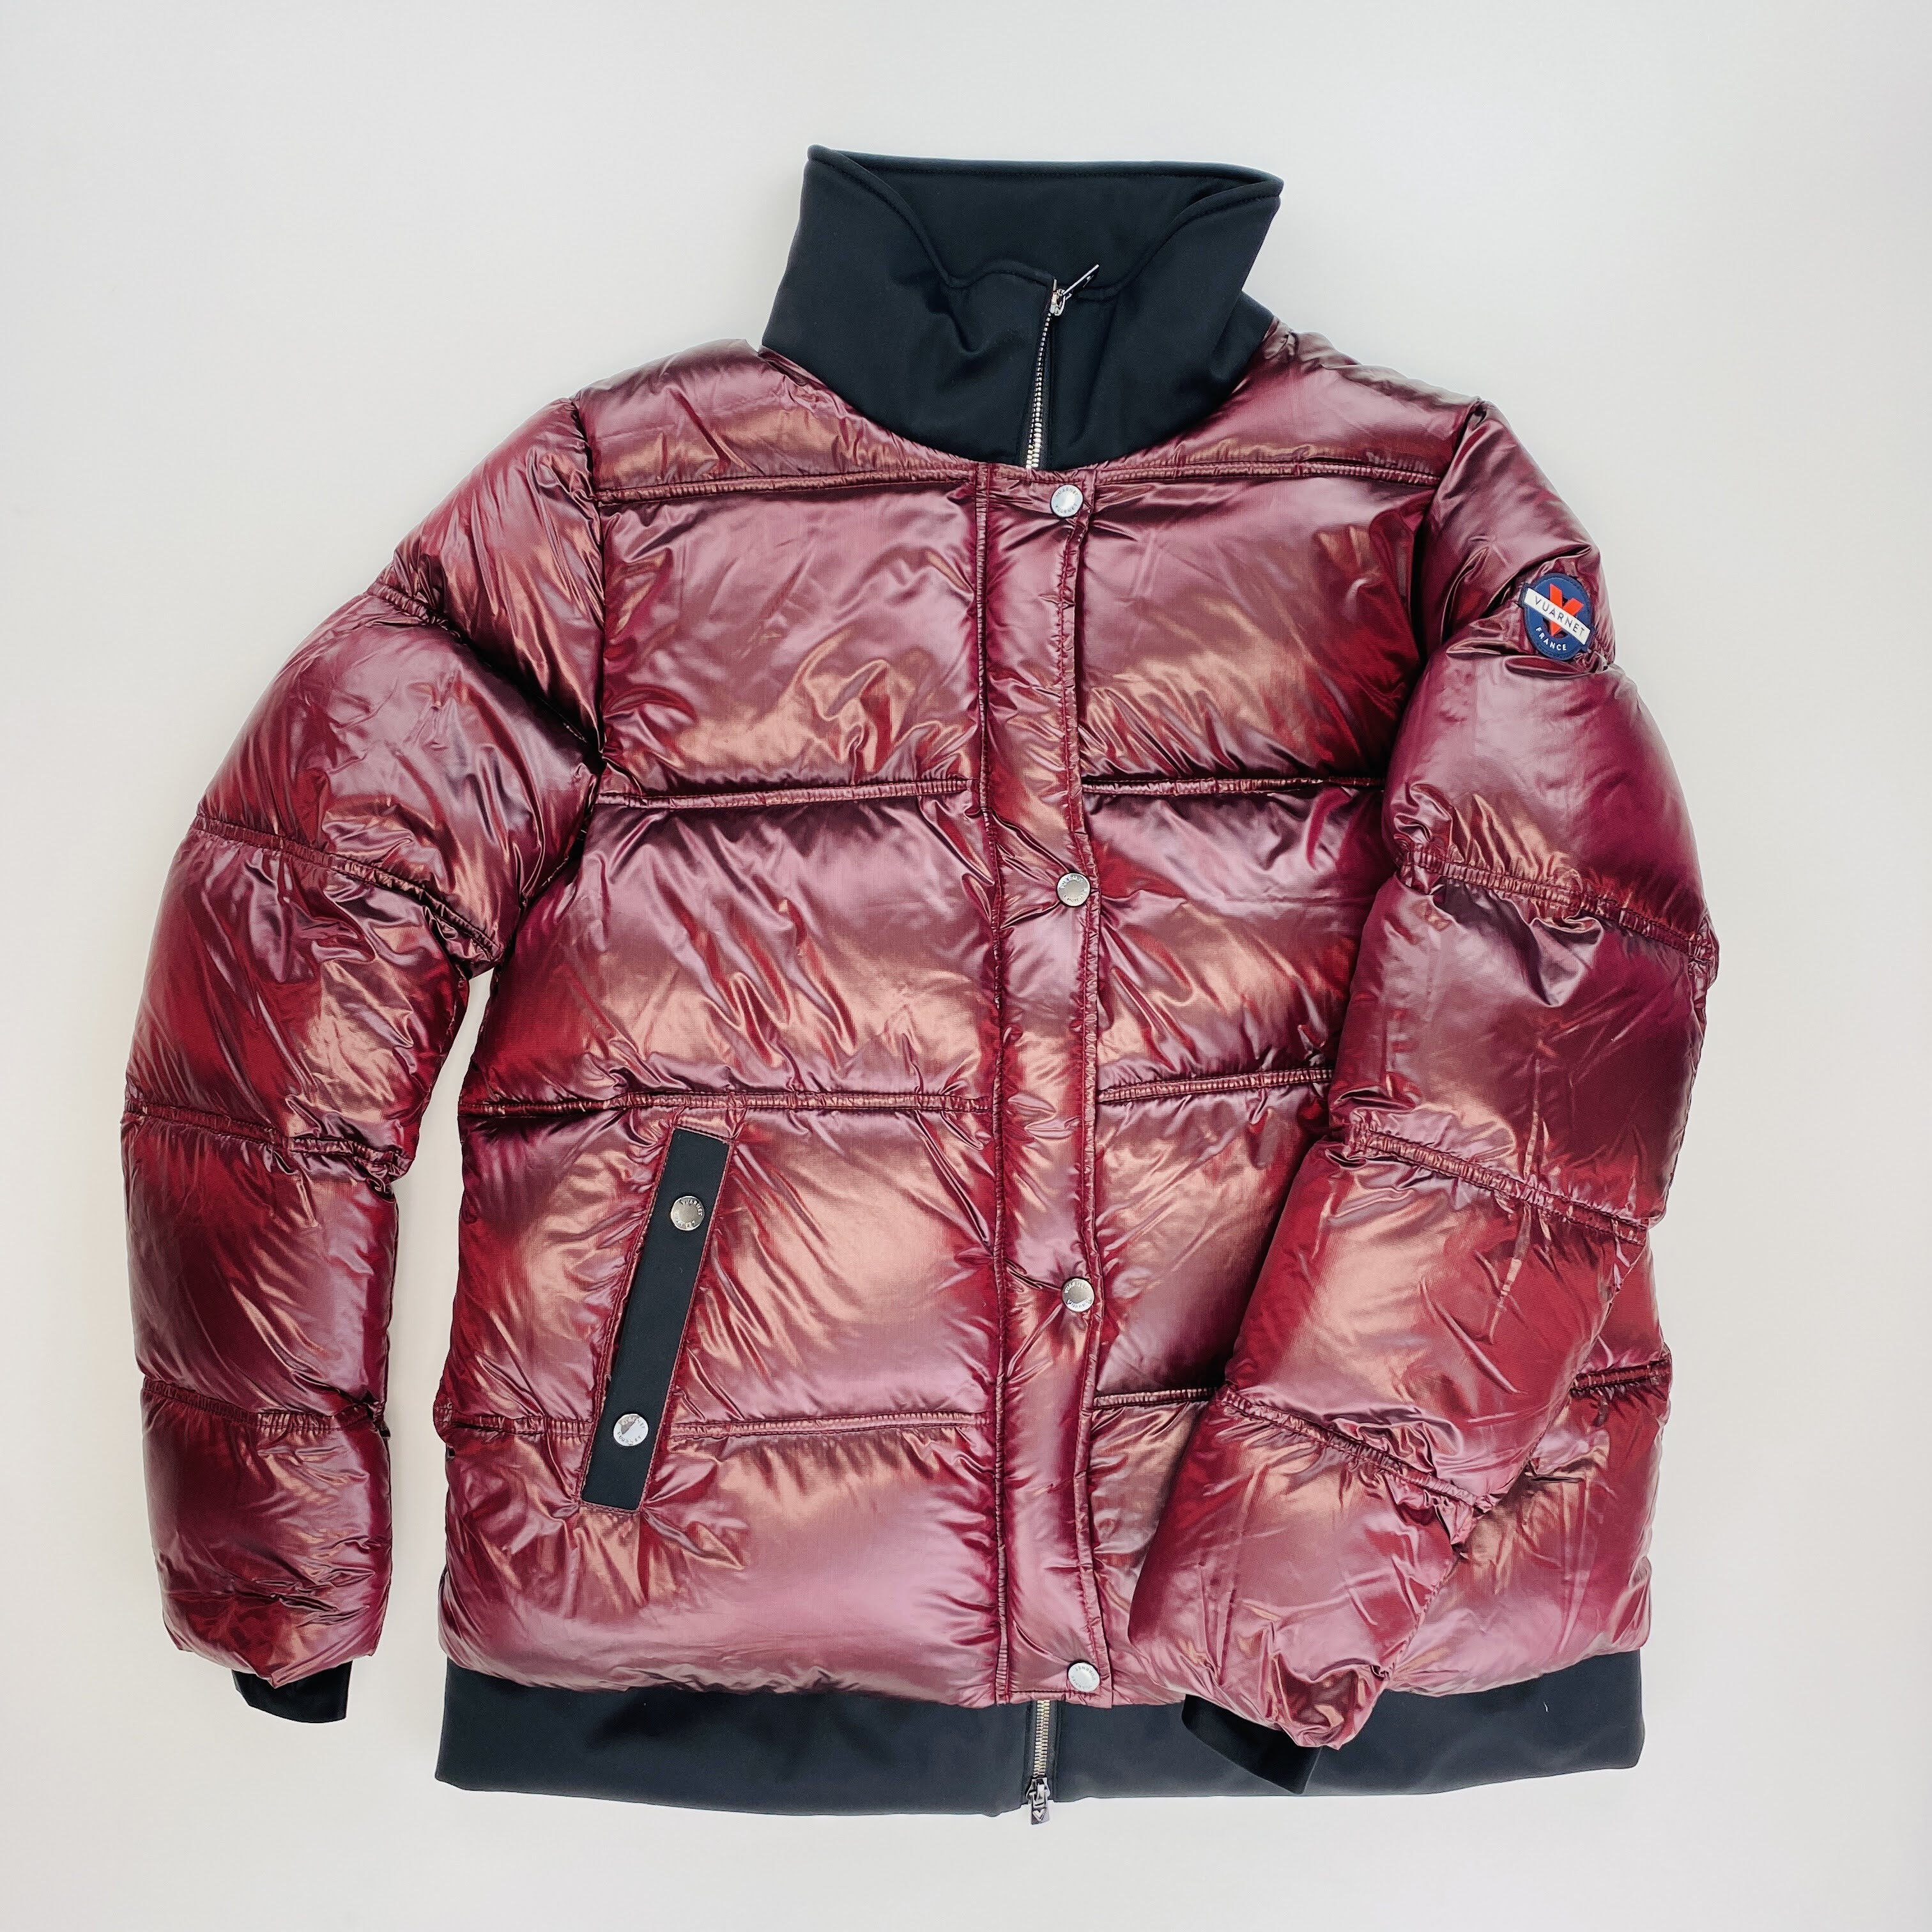 Vuarnet Loira Jacket - Giacca sintetica di seconda mano - Donna - Rosso - S | Hardloop